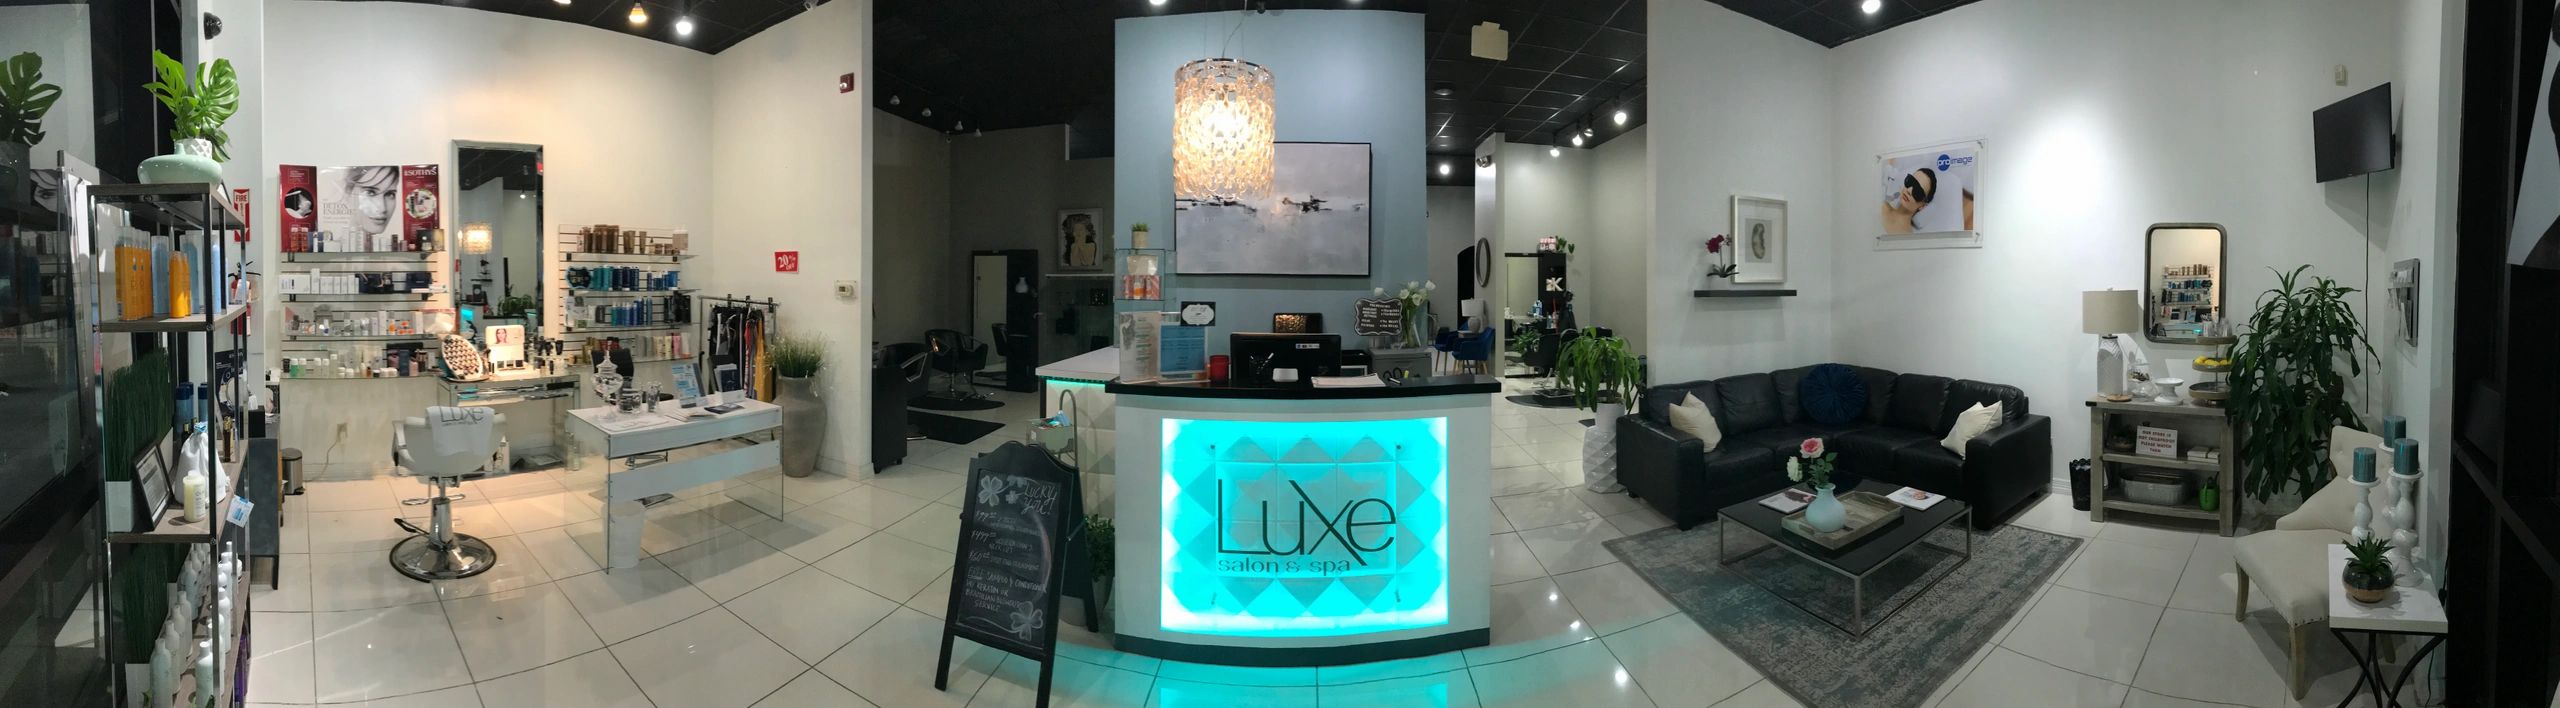 Luxe Salon  Spa